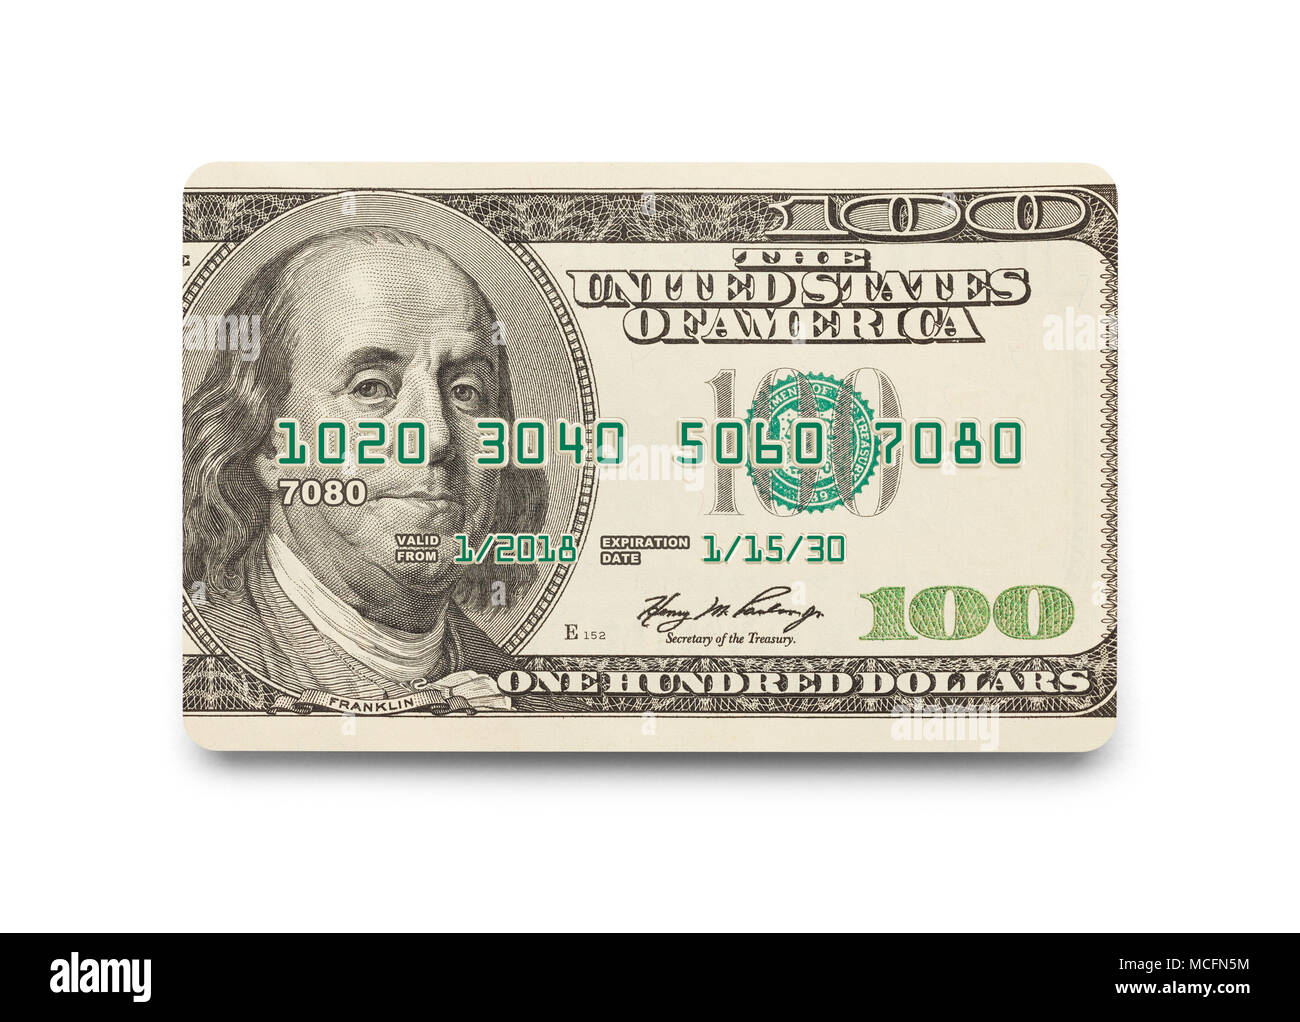 Money Credit Card Isolated on White Background. Stock Photo